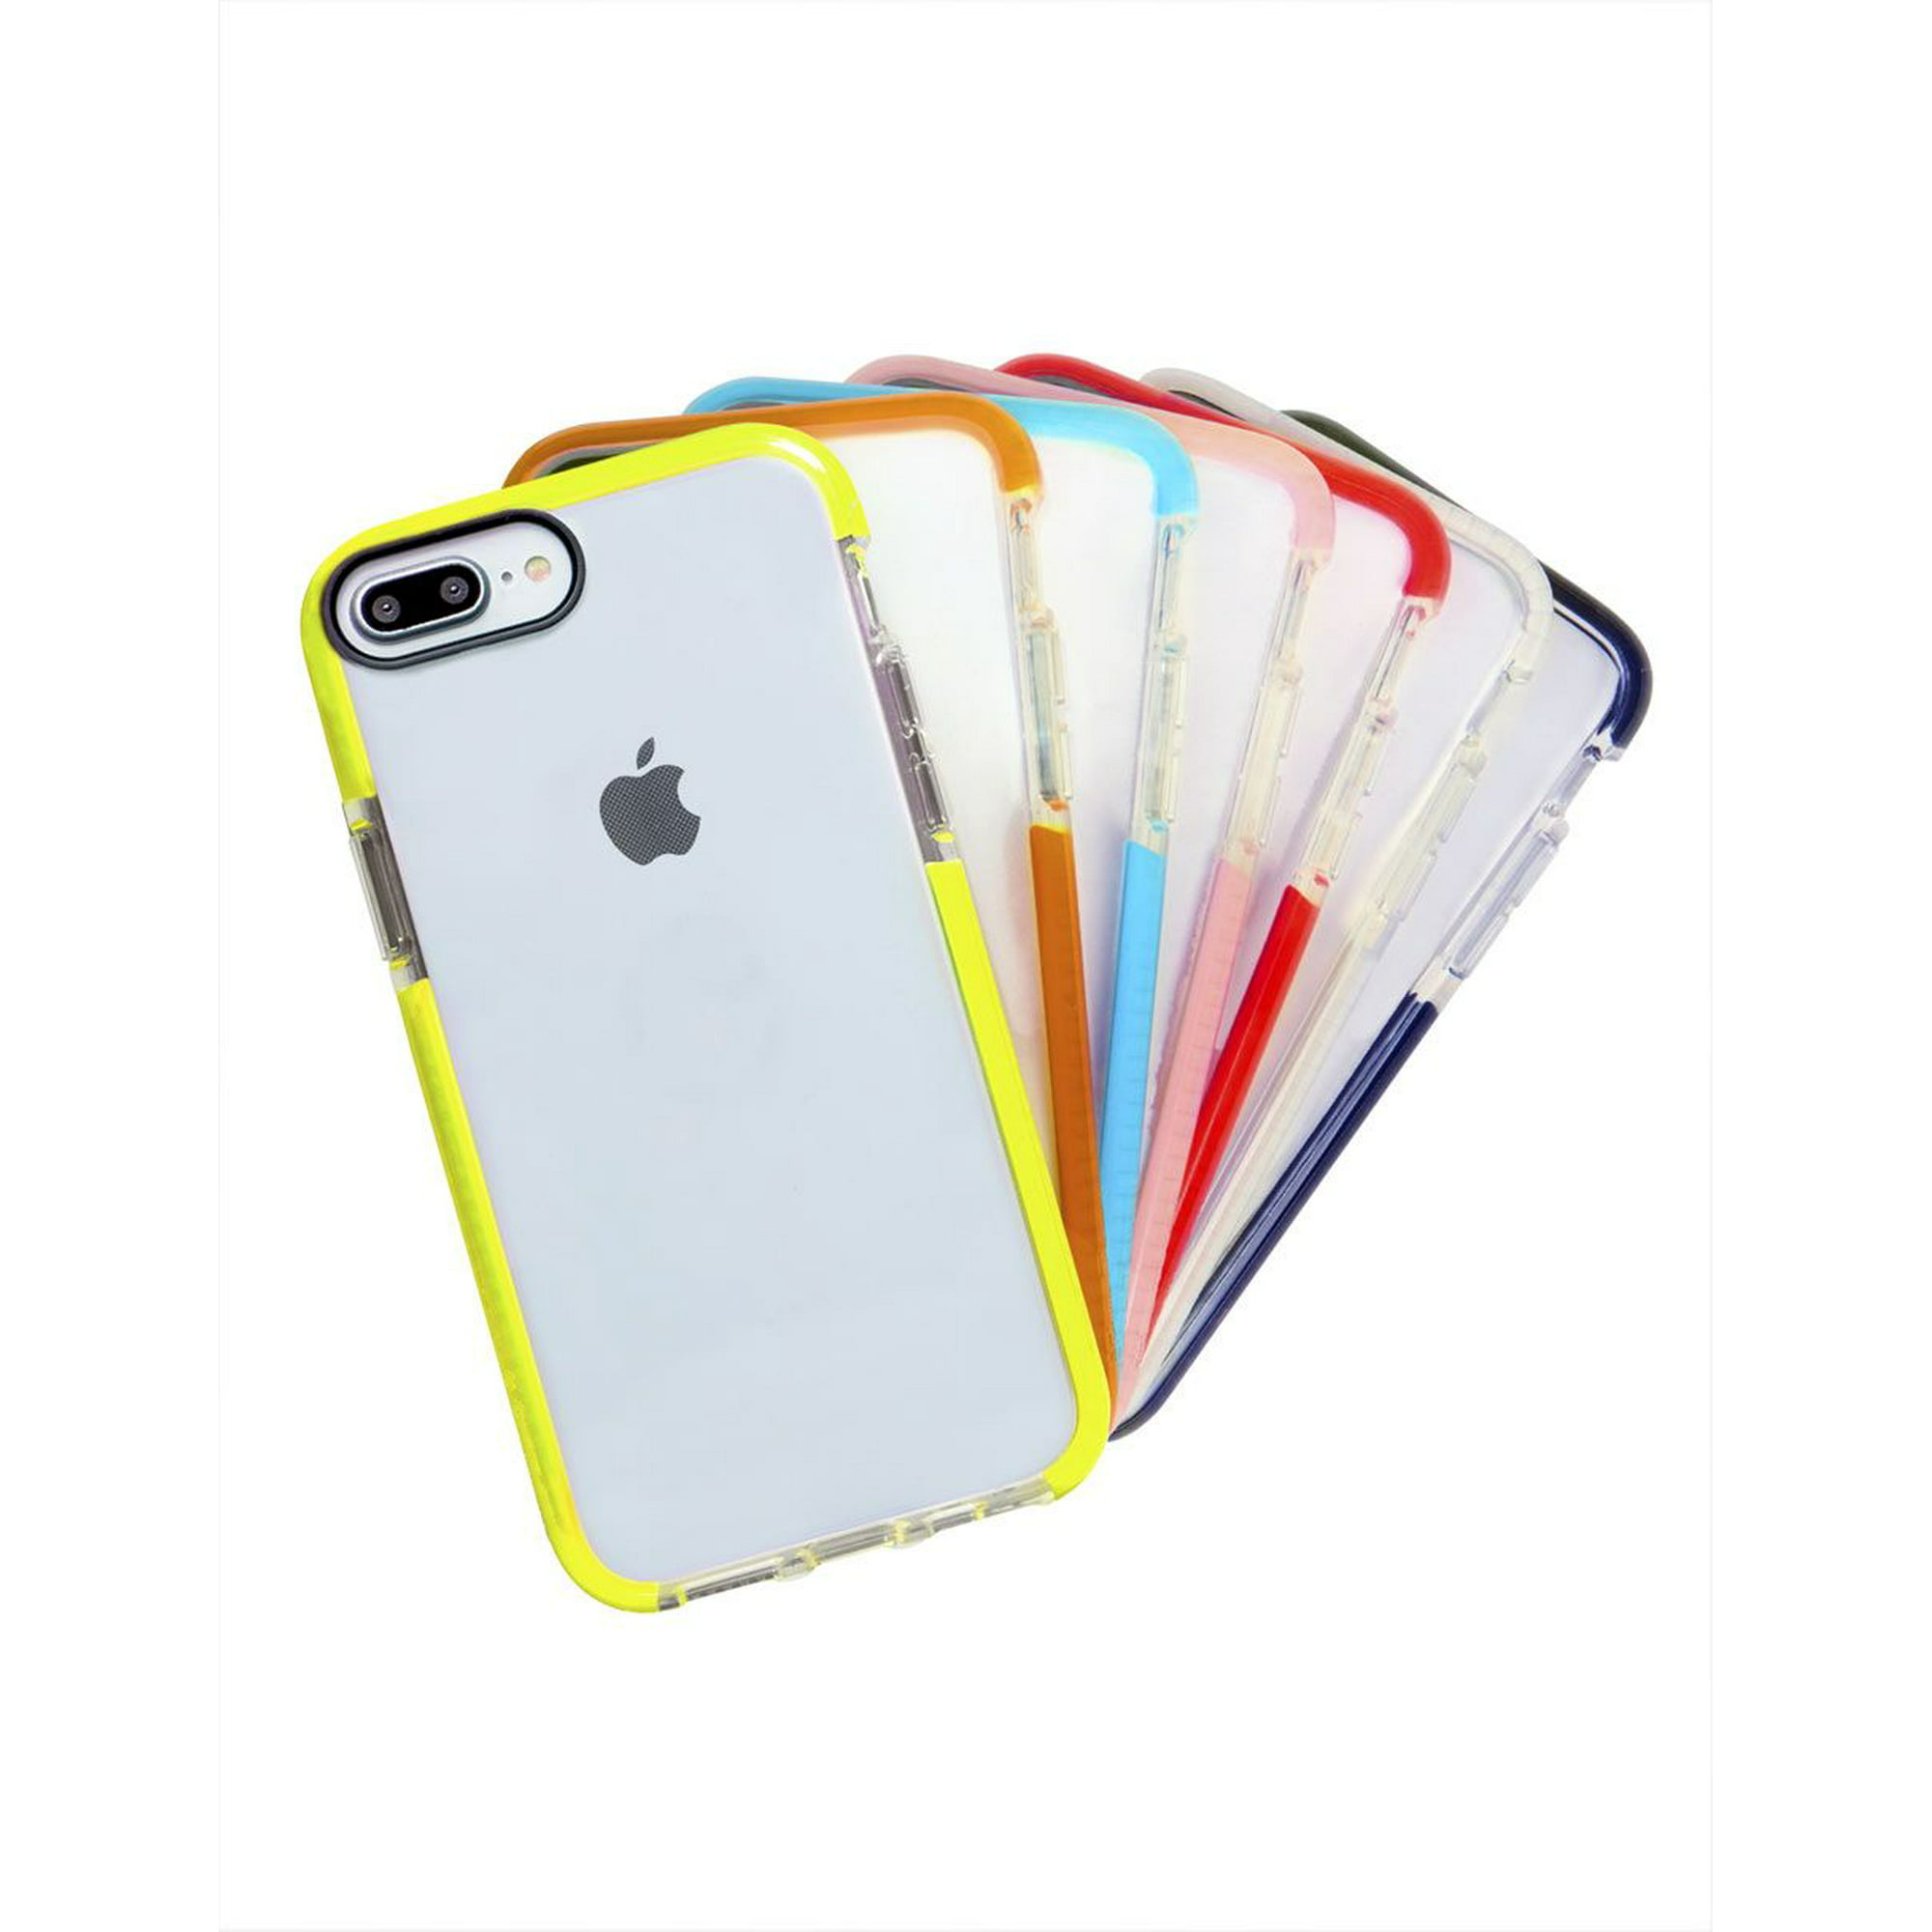 Carcasa compatible con iPhone 8 Plus de Apple, iPhone 7 Plus (5,5 pulgadas)  iPhone 8 Plus TPU Case Slim Transparente Flexible TPU Cover con protección